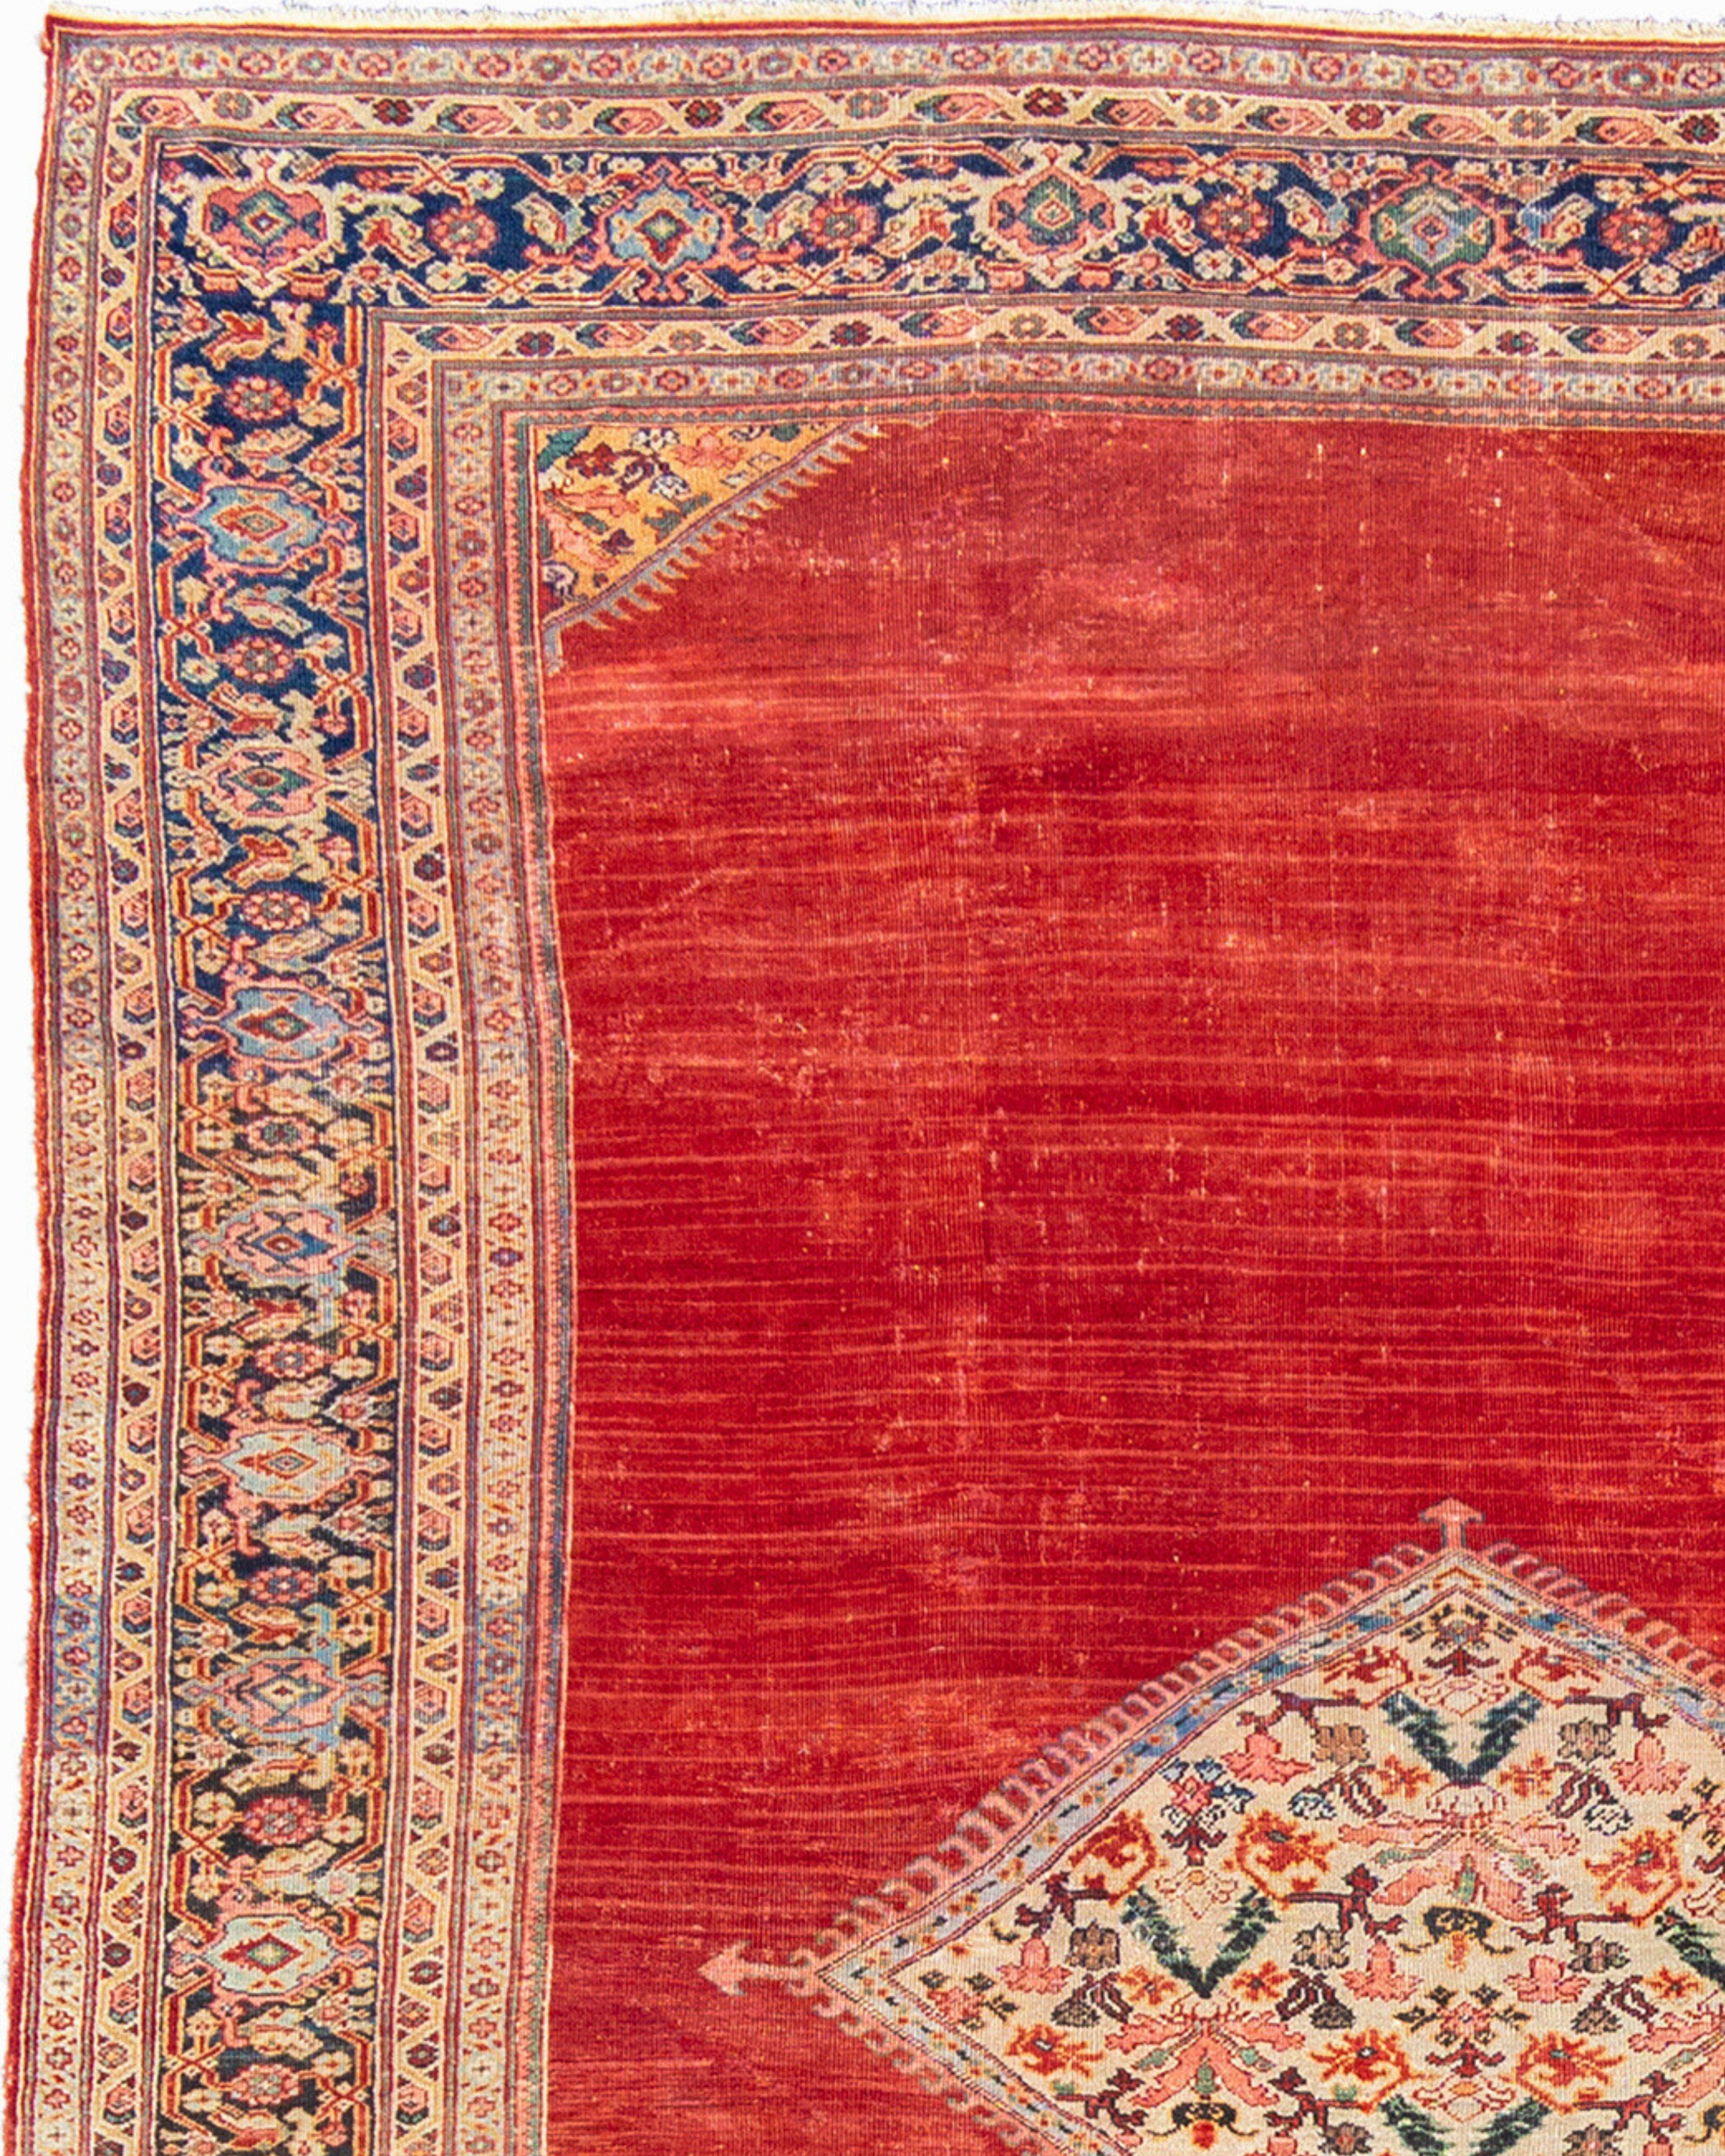 Hand-Woven Antique Persian Mahal Carpet, c. 1900 For Sale